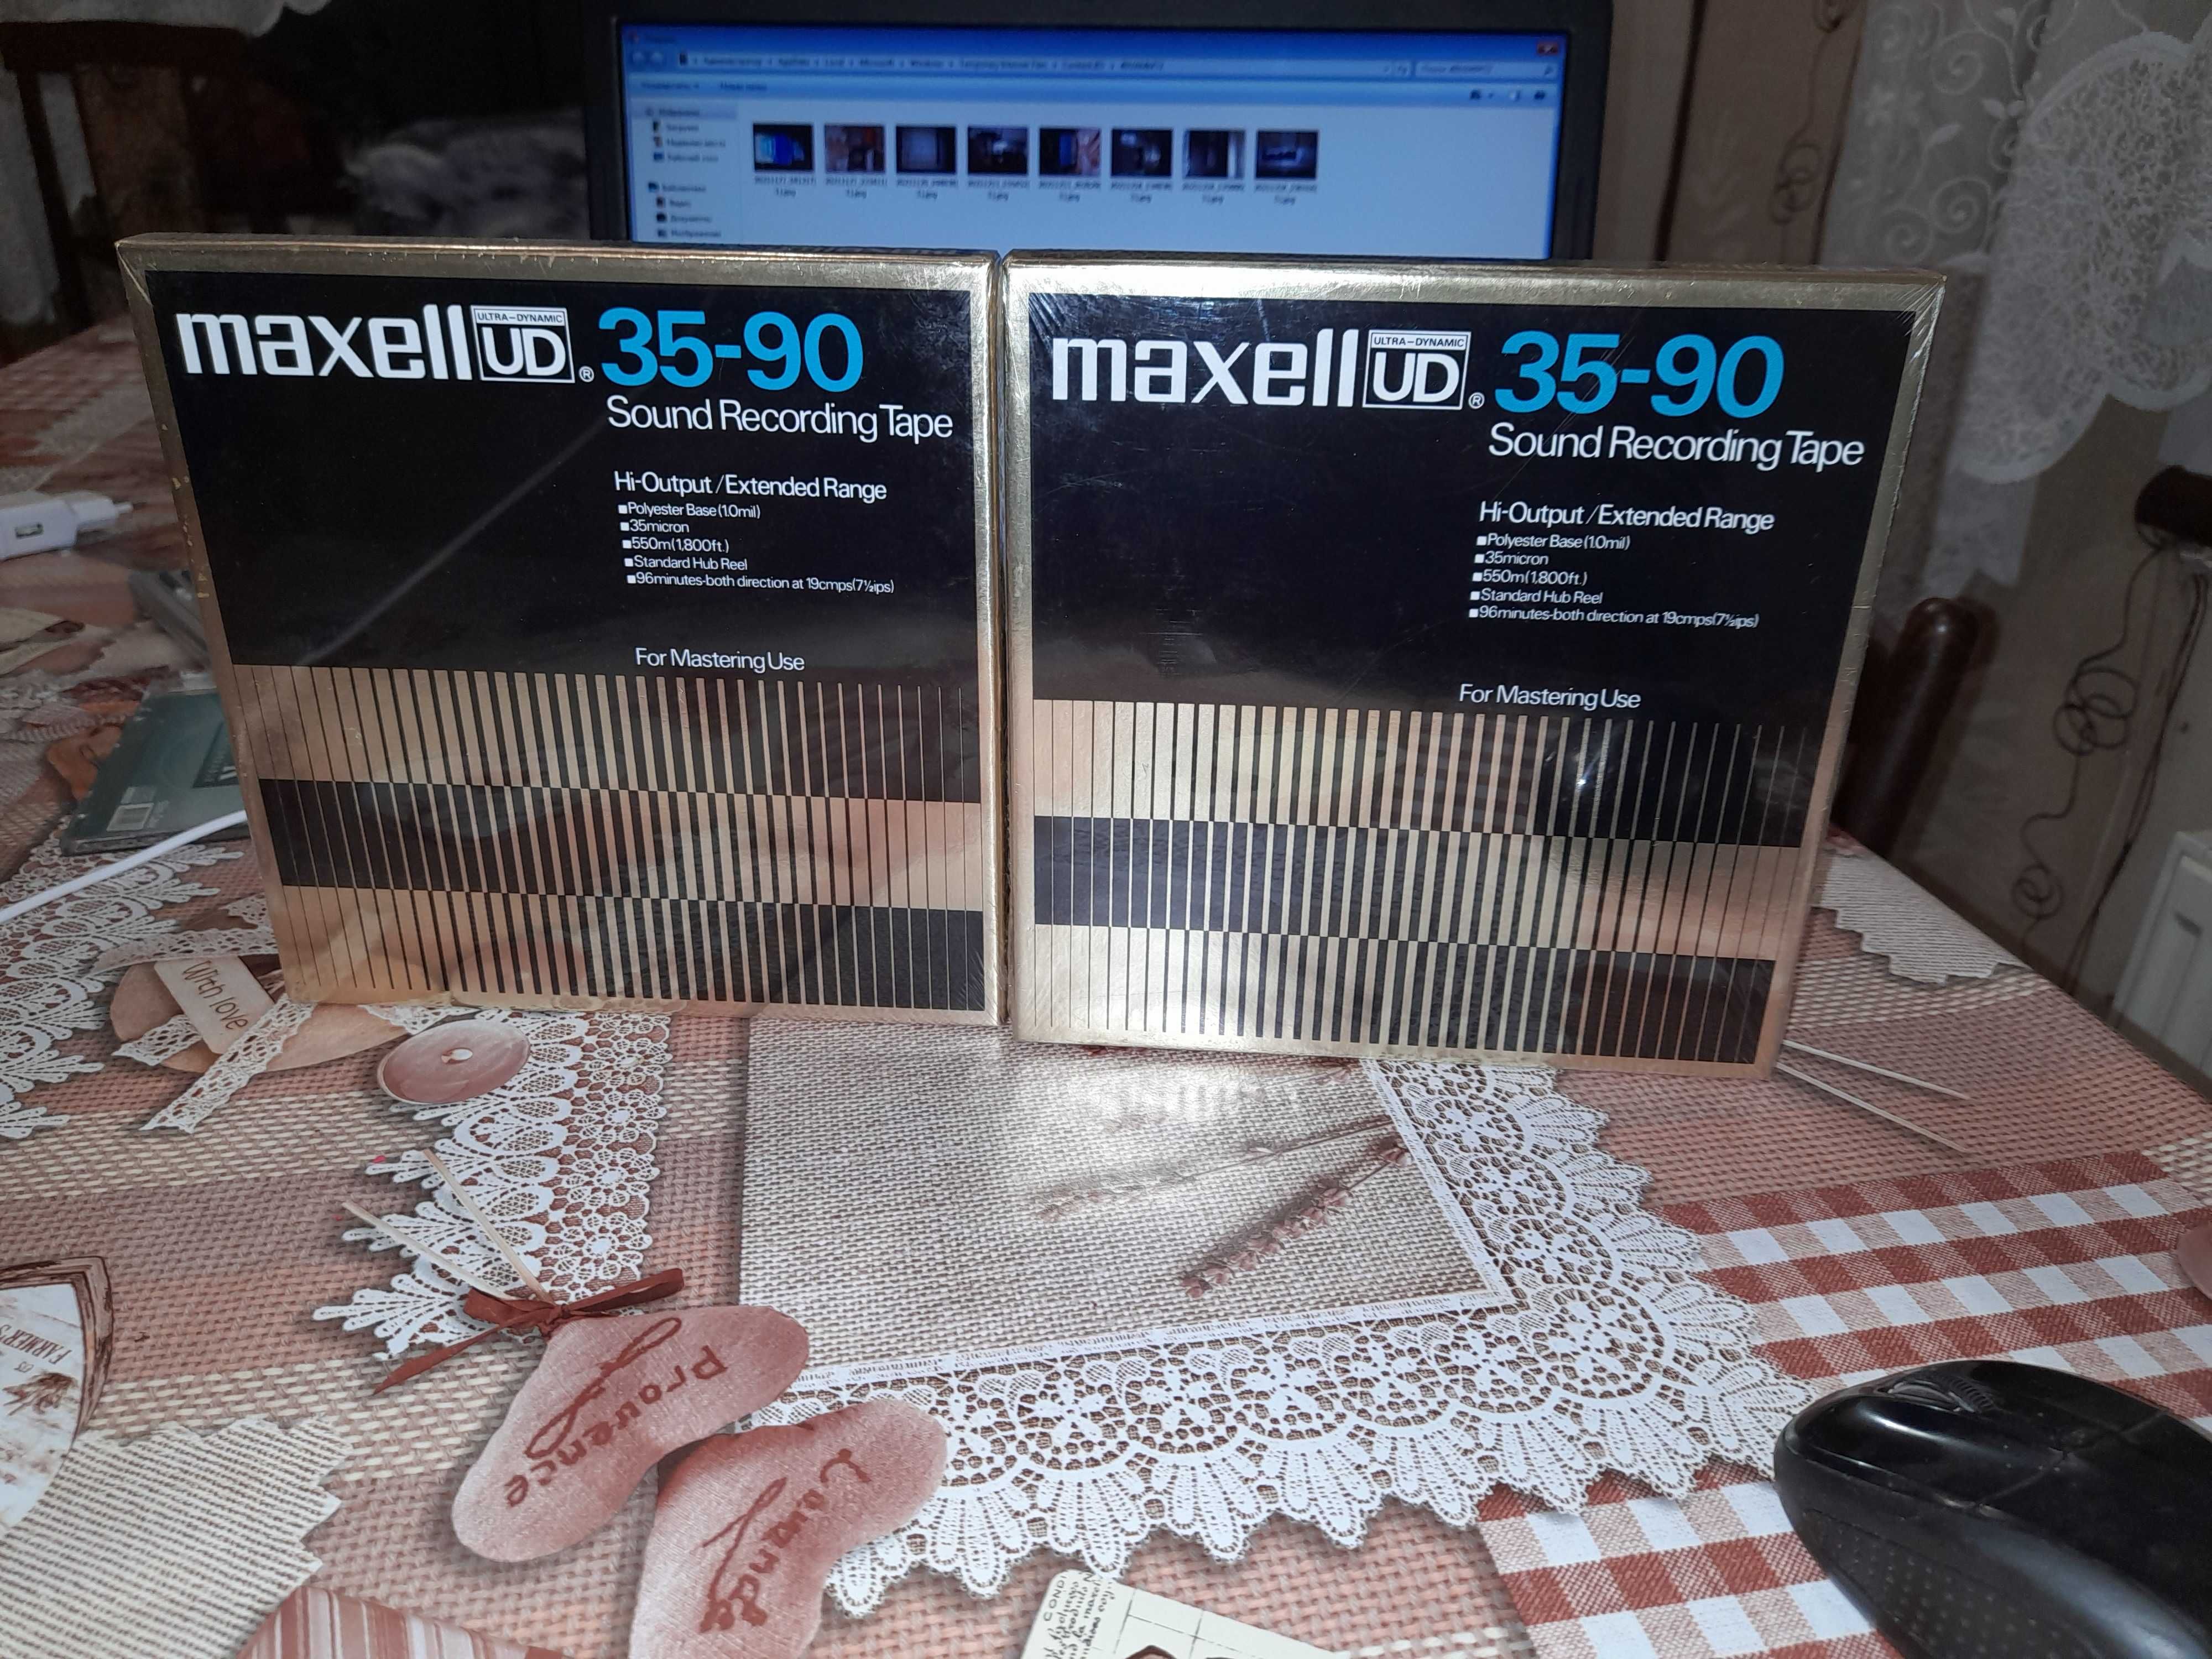 лента MAXELL UD 35-90 550m новая кассеты новые